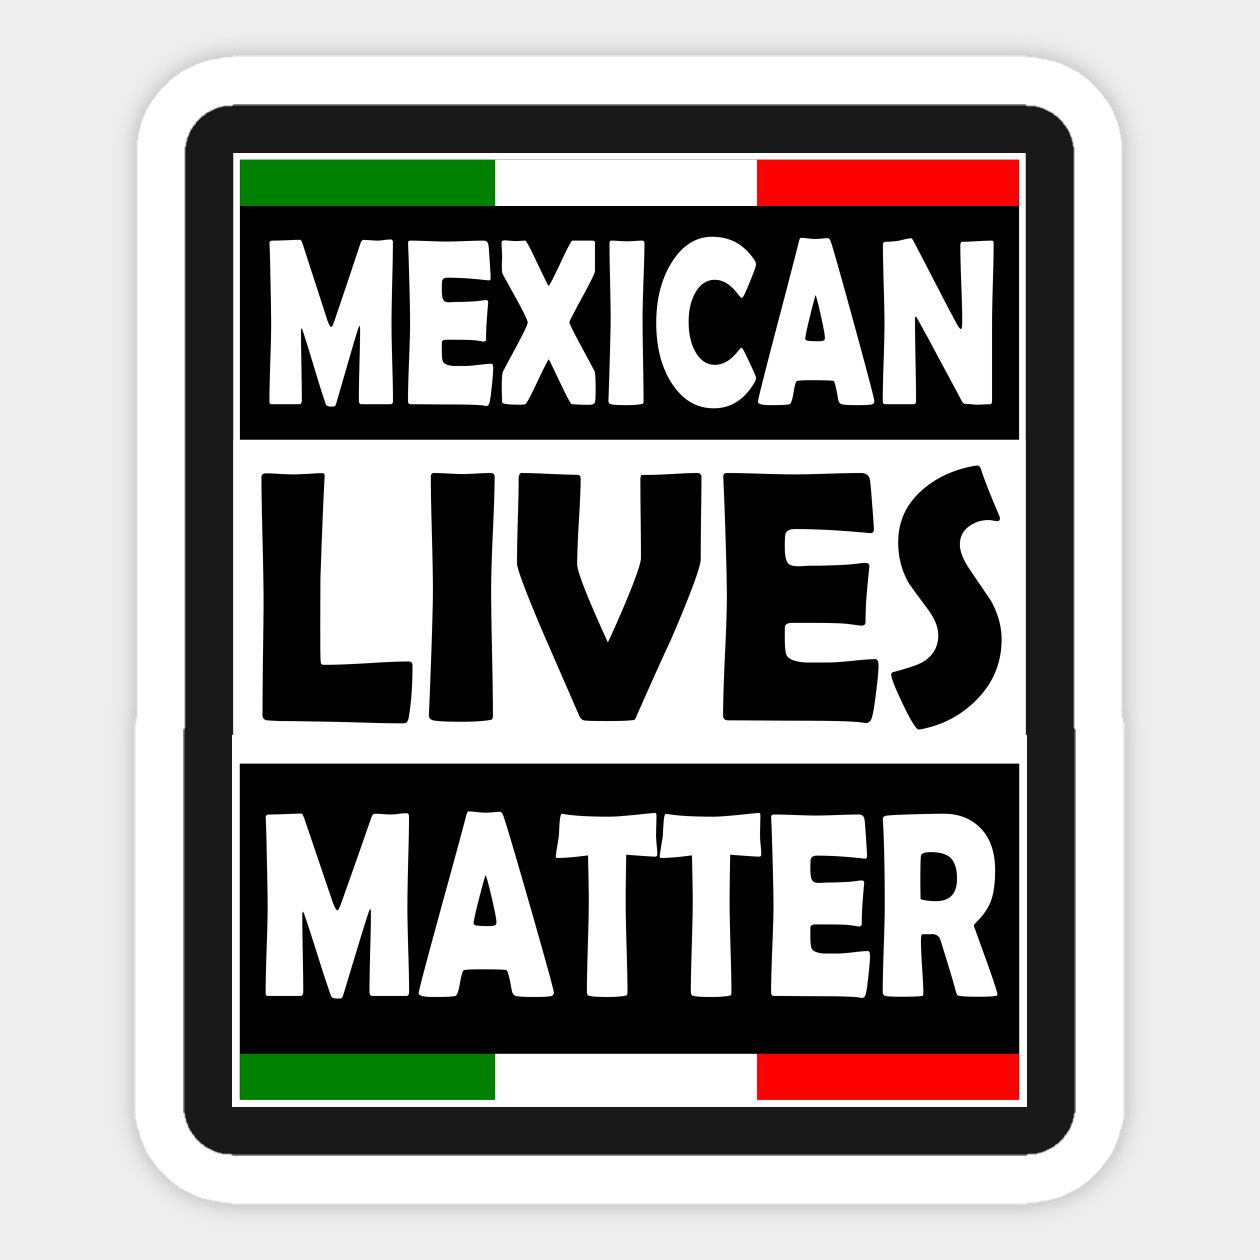 Hispanic Lives Matter Wallpapers